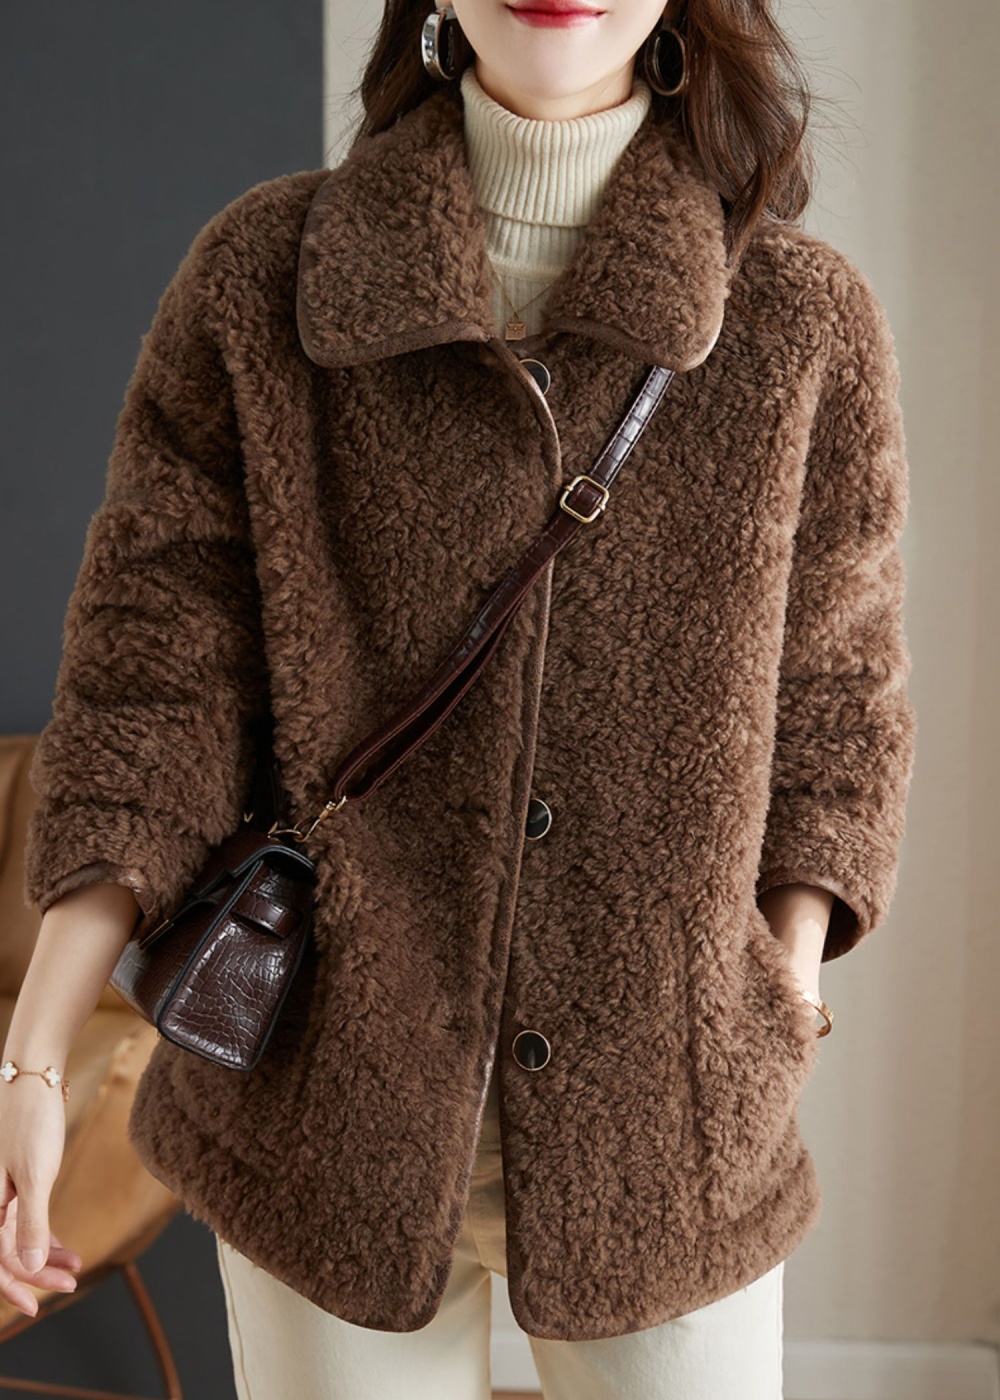 Velvet jacket fur coat autumn and winter overcoat for women